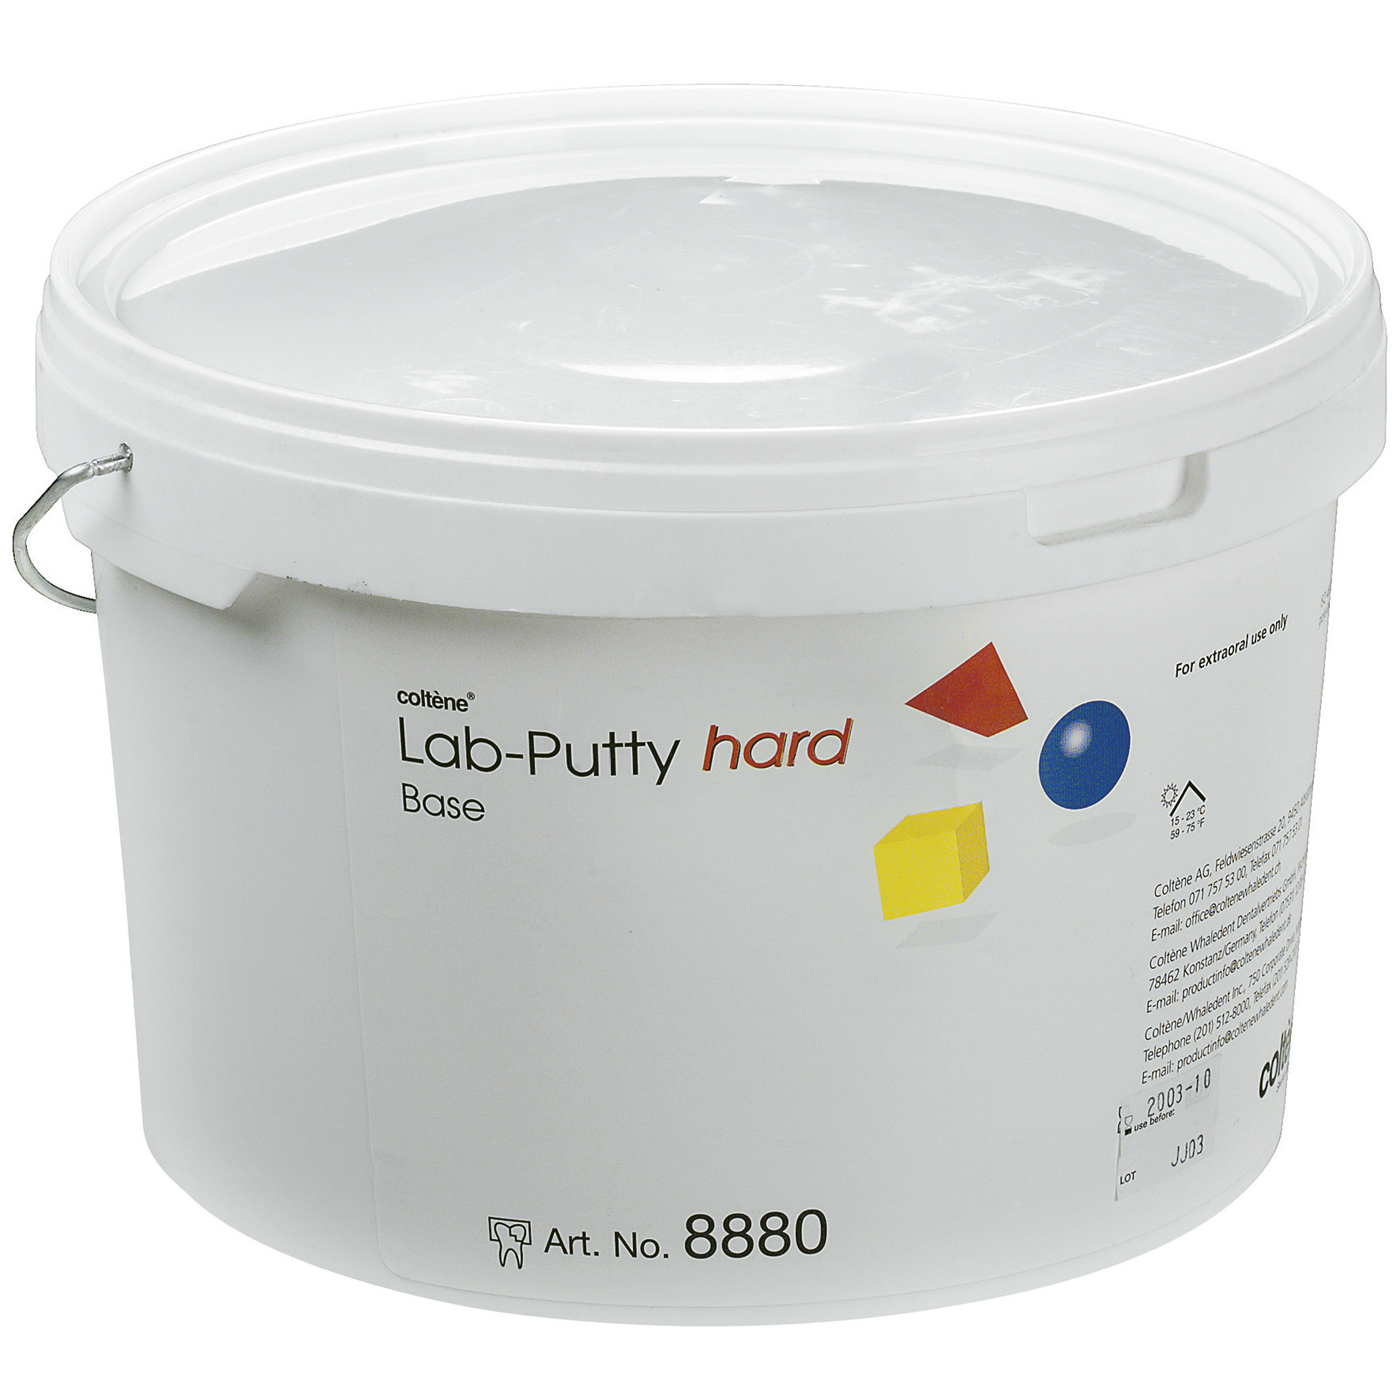 Lab-Putty hard Silicone Putty - 2600 ml